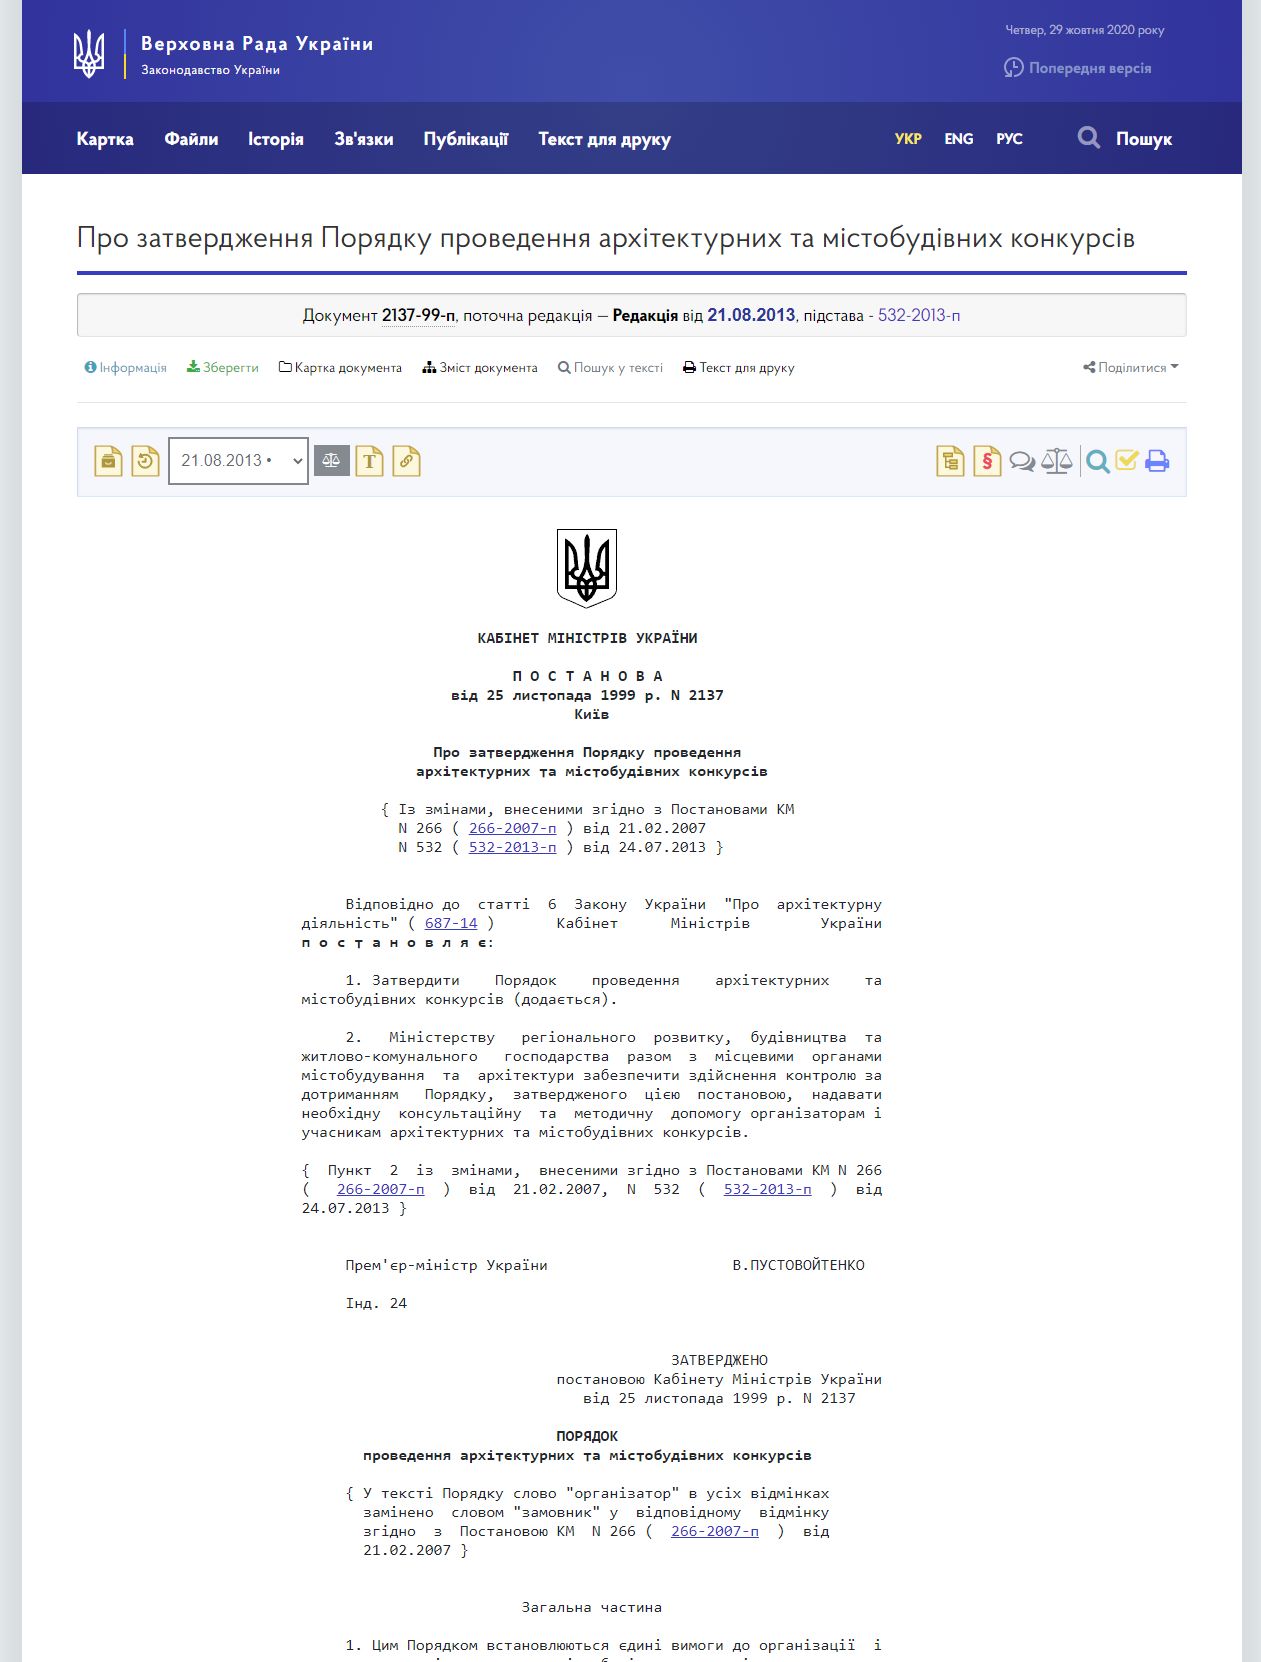 https://zakon.rada.gov.ua/laws/show/2137-99-%D0%BF#Text